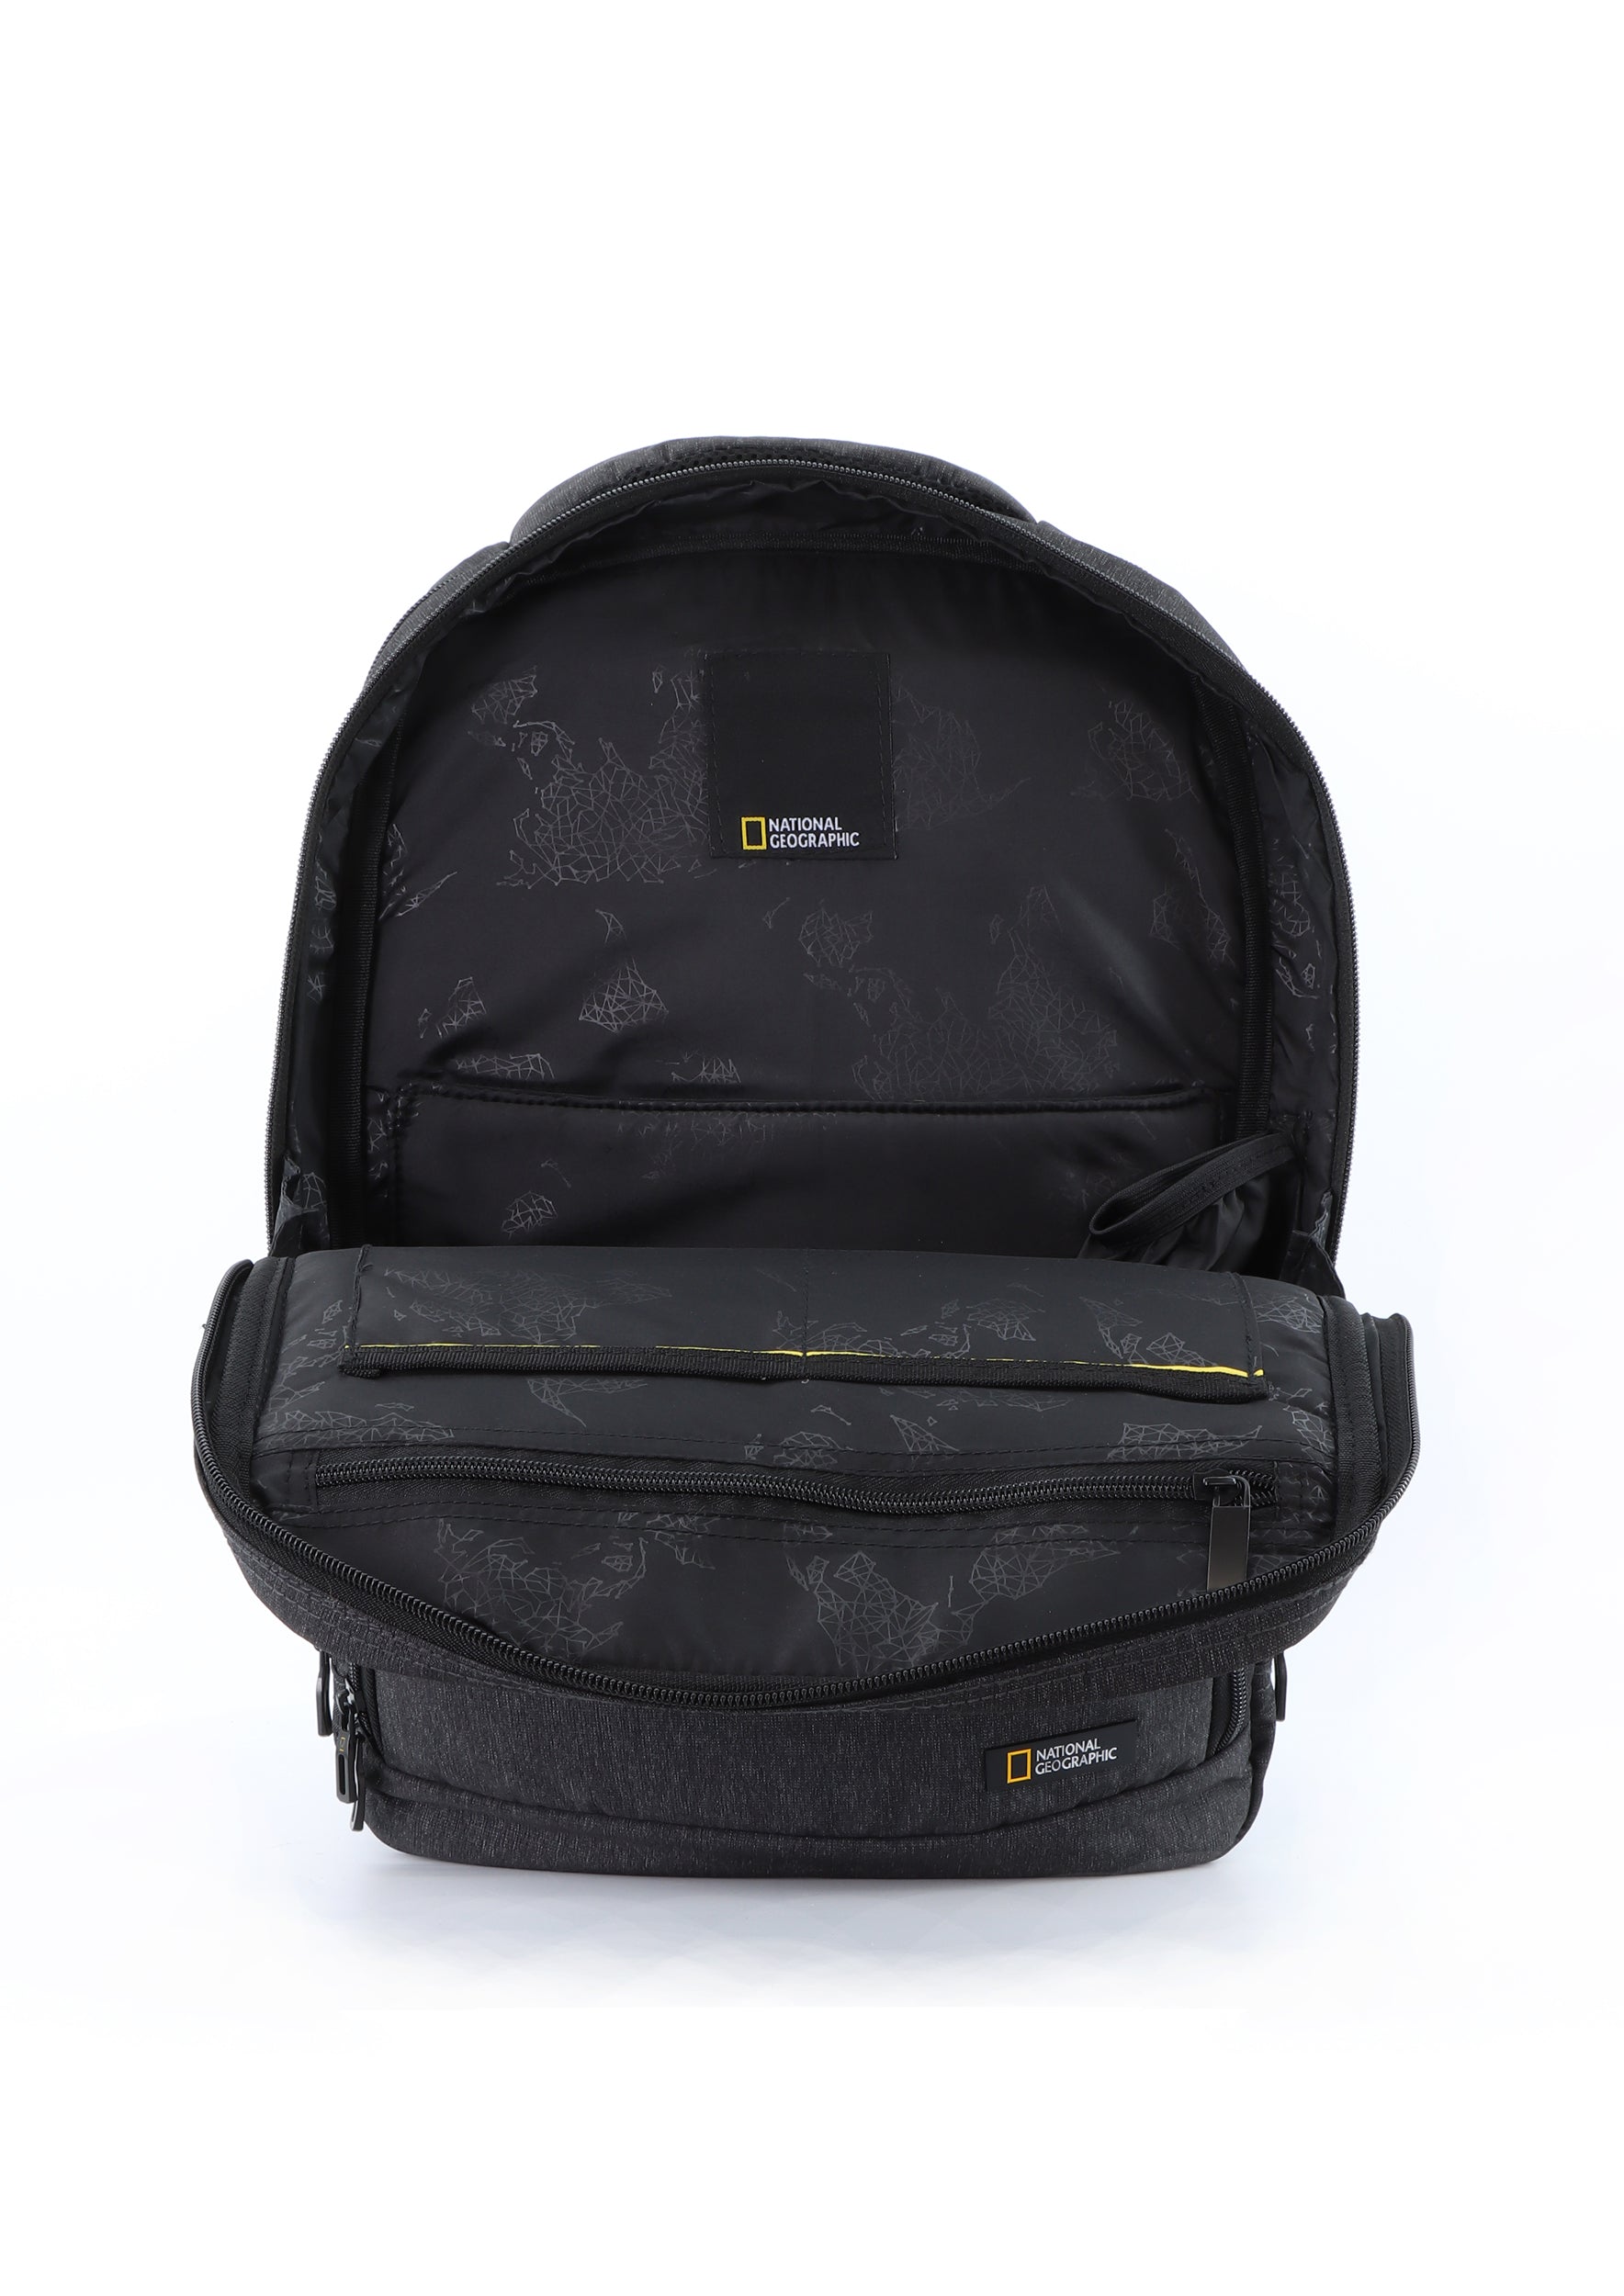 National Geographic Pro - Binnenkant 2-Tone Grijs laptop rugzak | luggage4u.be